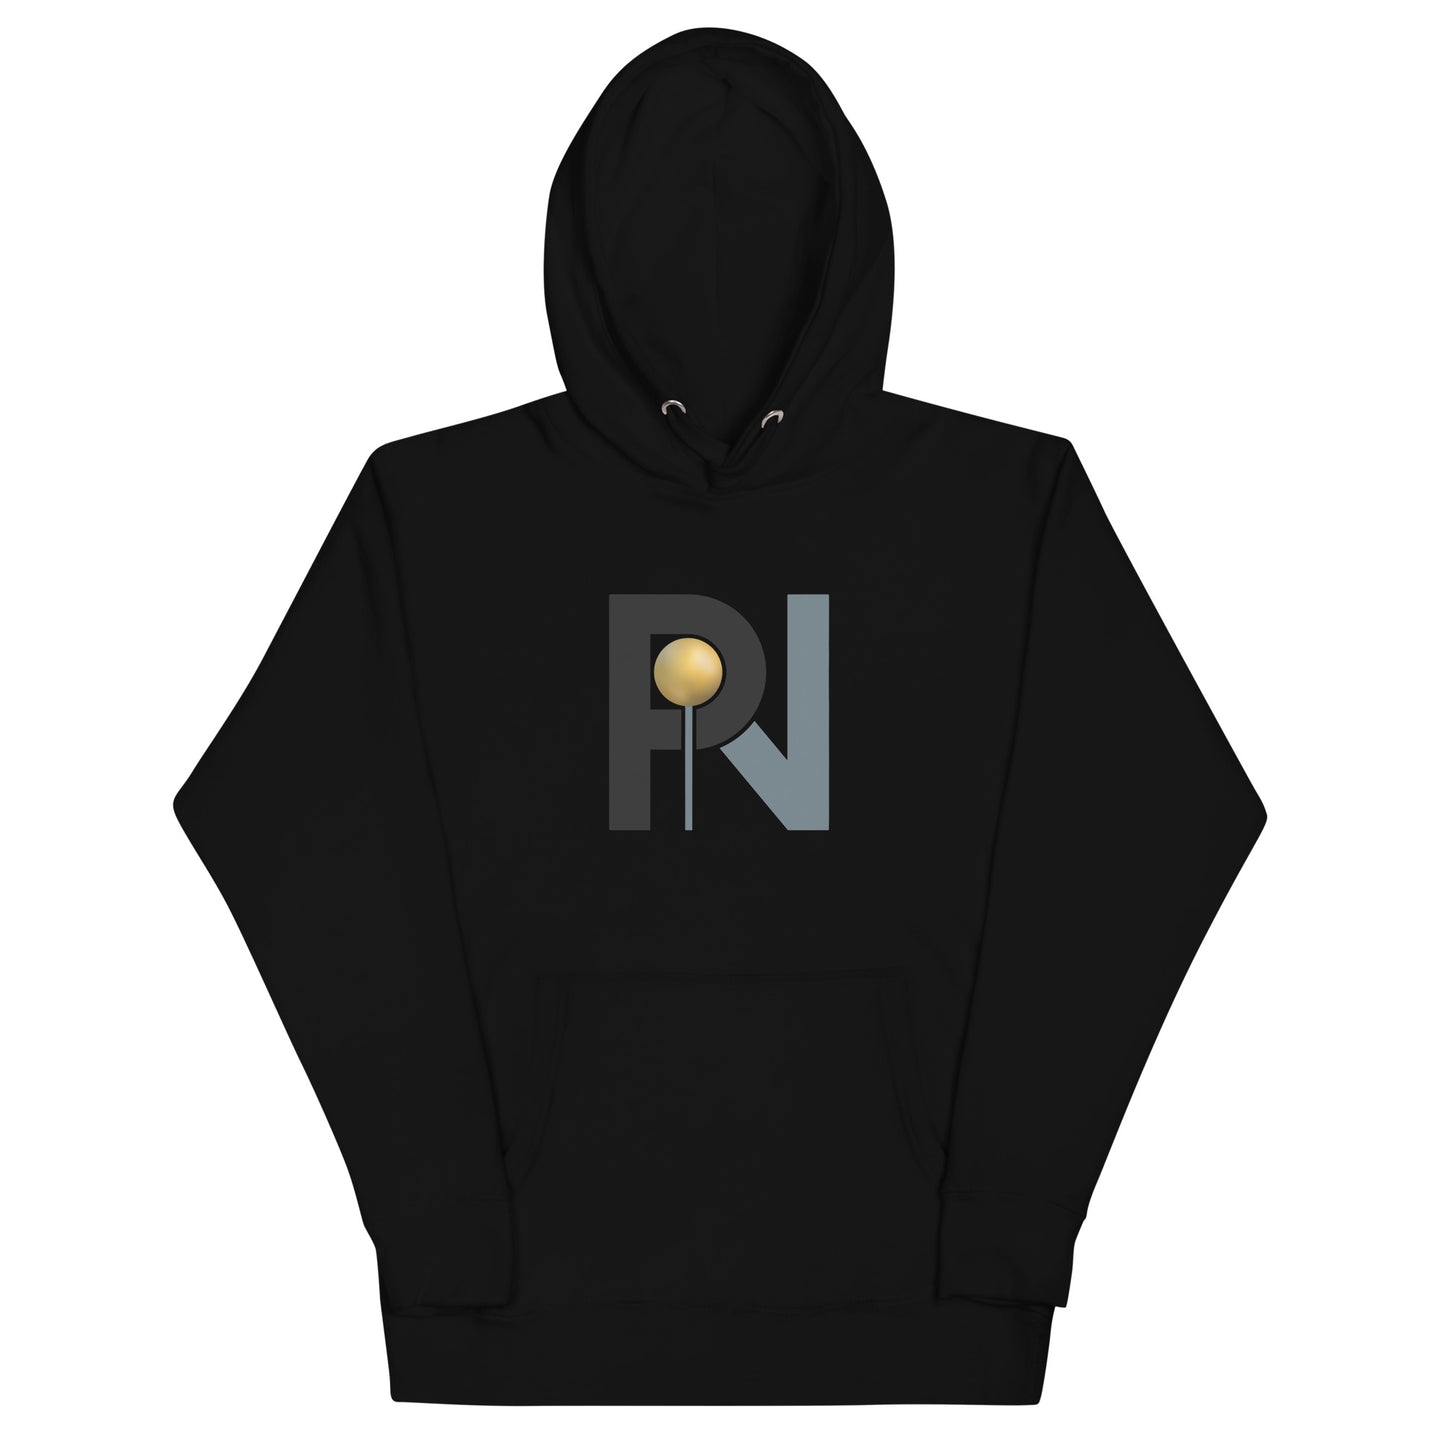 Unisex graphic class hoodie